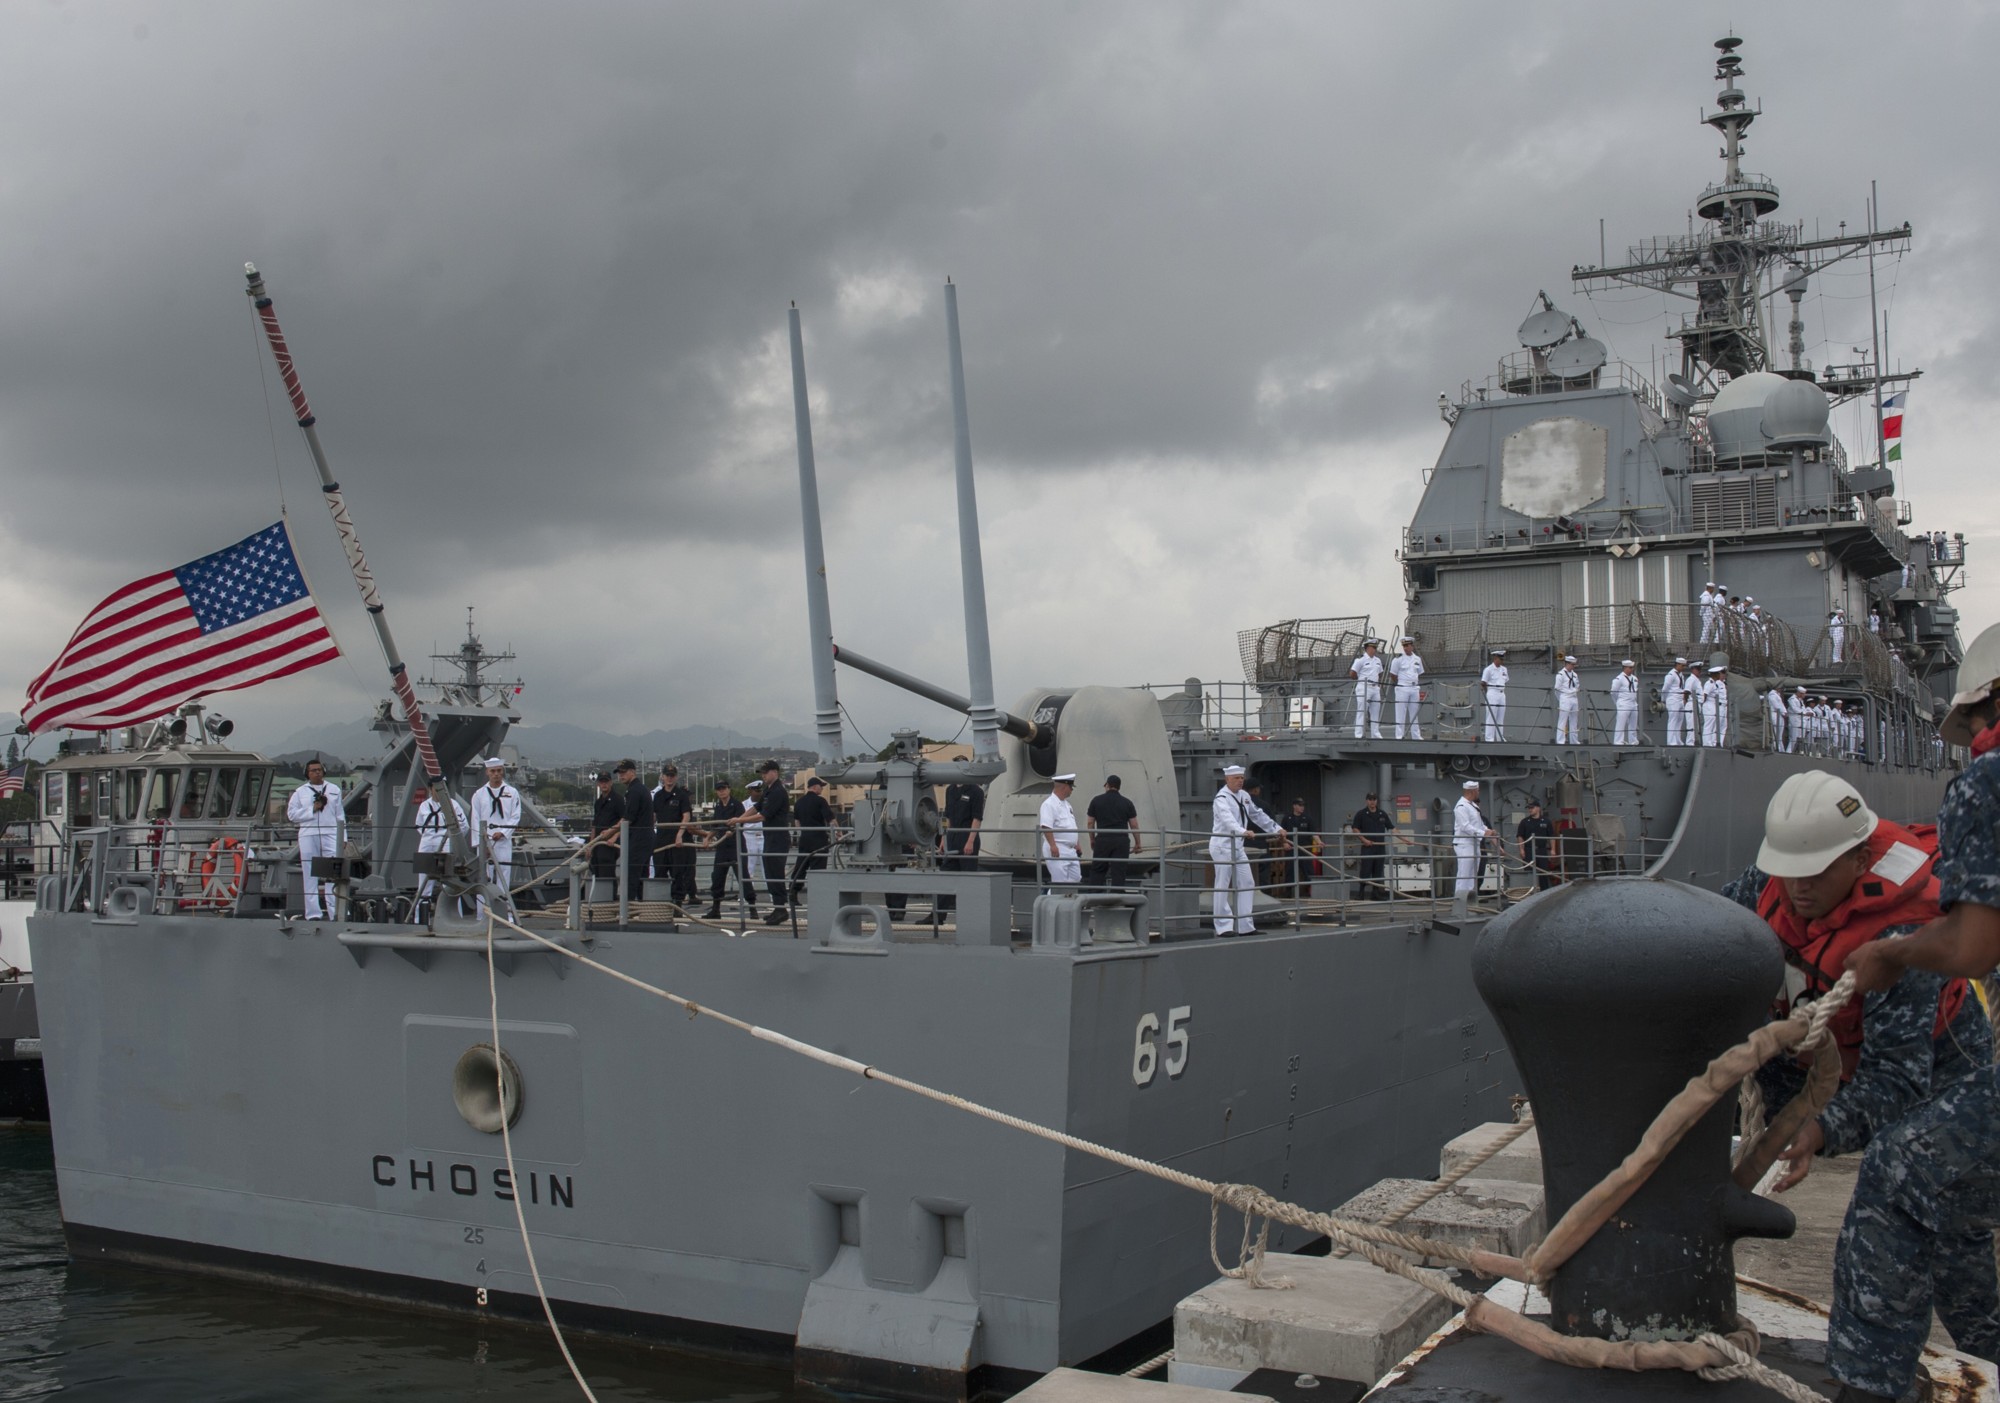 cg-65 uss chosin ticonderoga class guided missile cruiser aegis us navy departing pearl harbor hickam hawaii 76